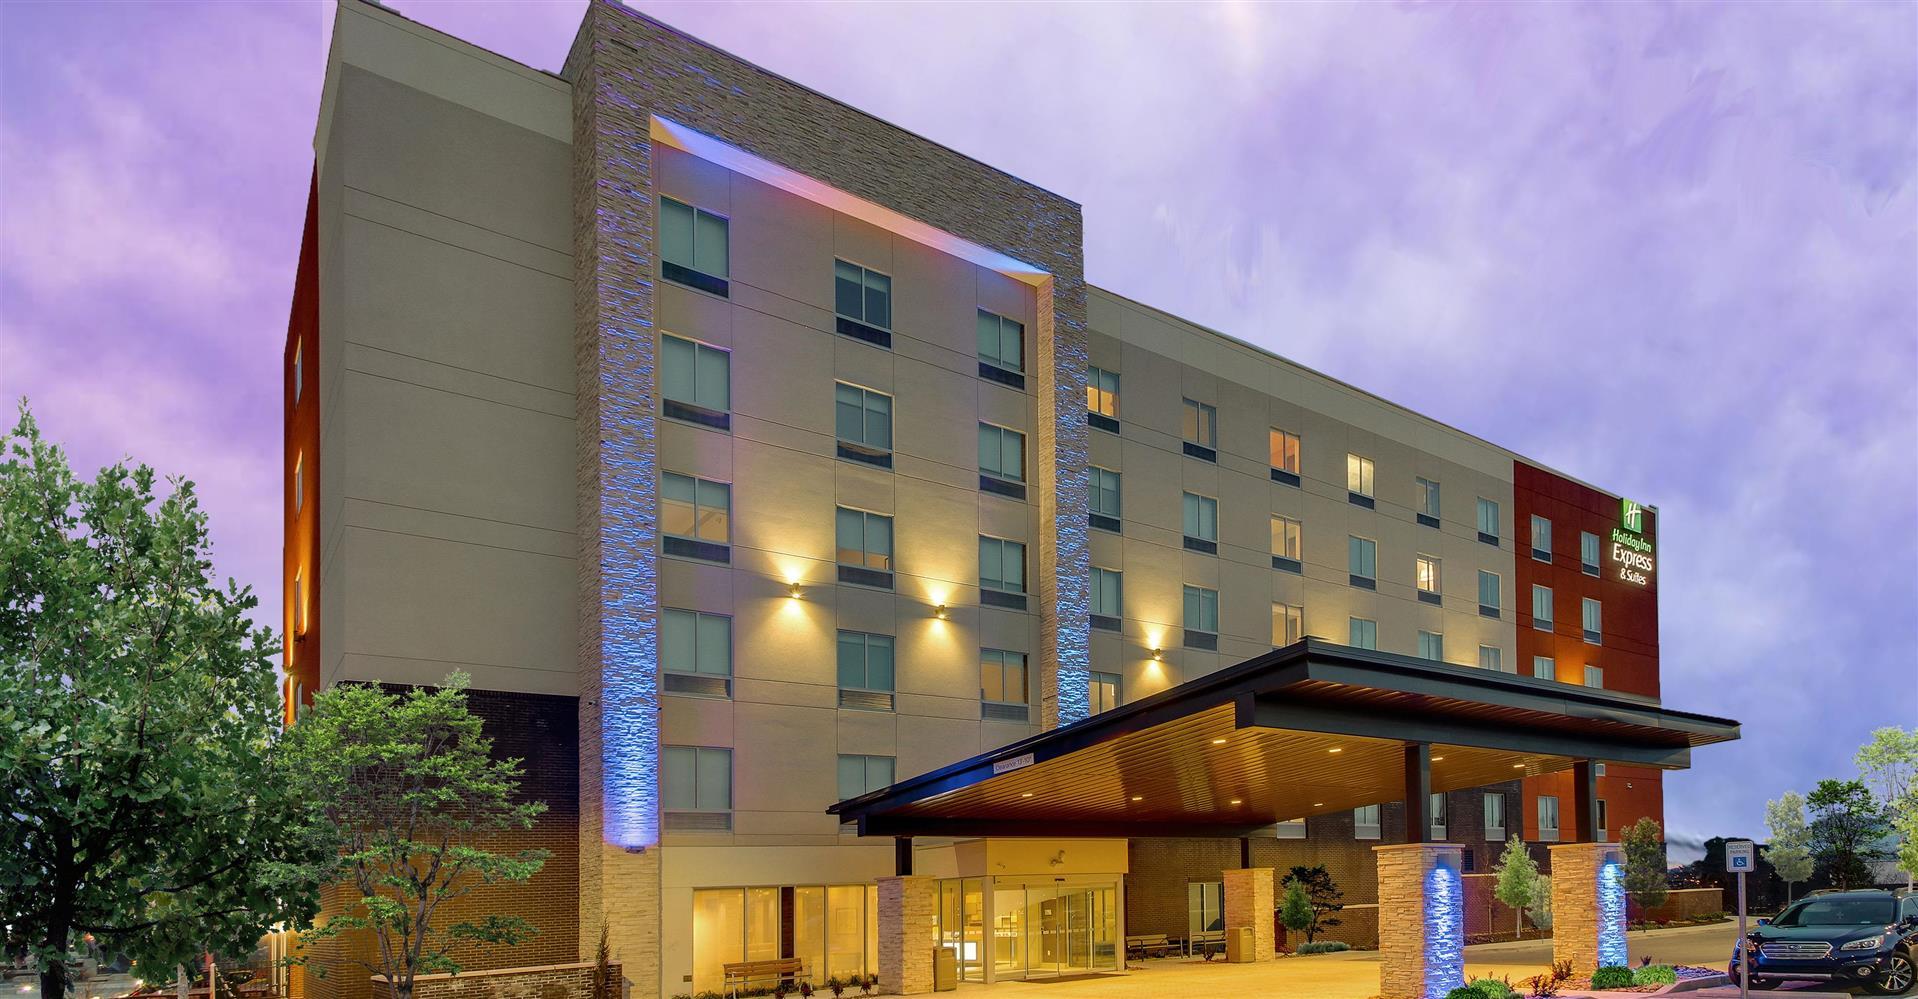 Holiday Inn Express & Suites Nashville MetroCenter Downtown in Nashville, TN